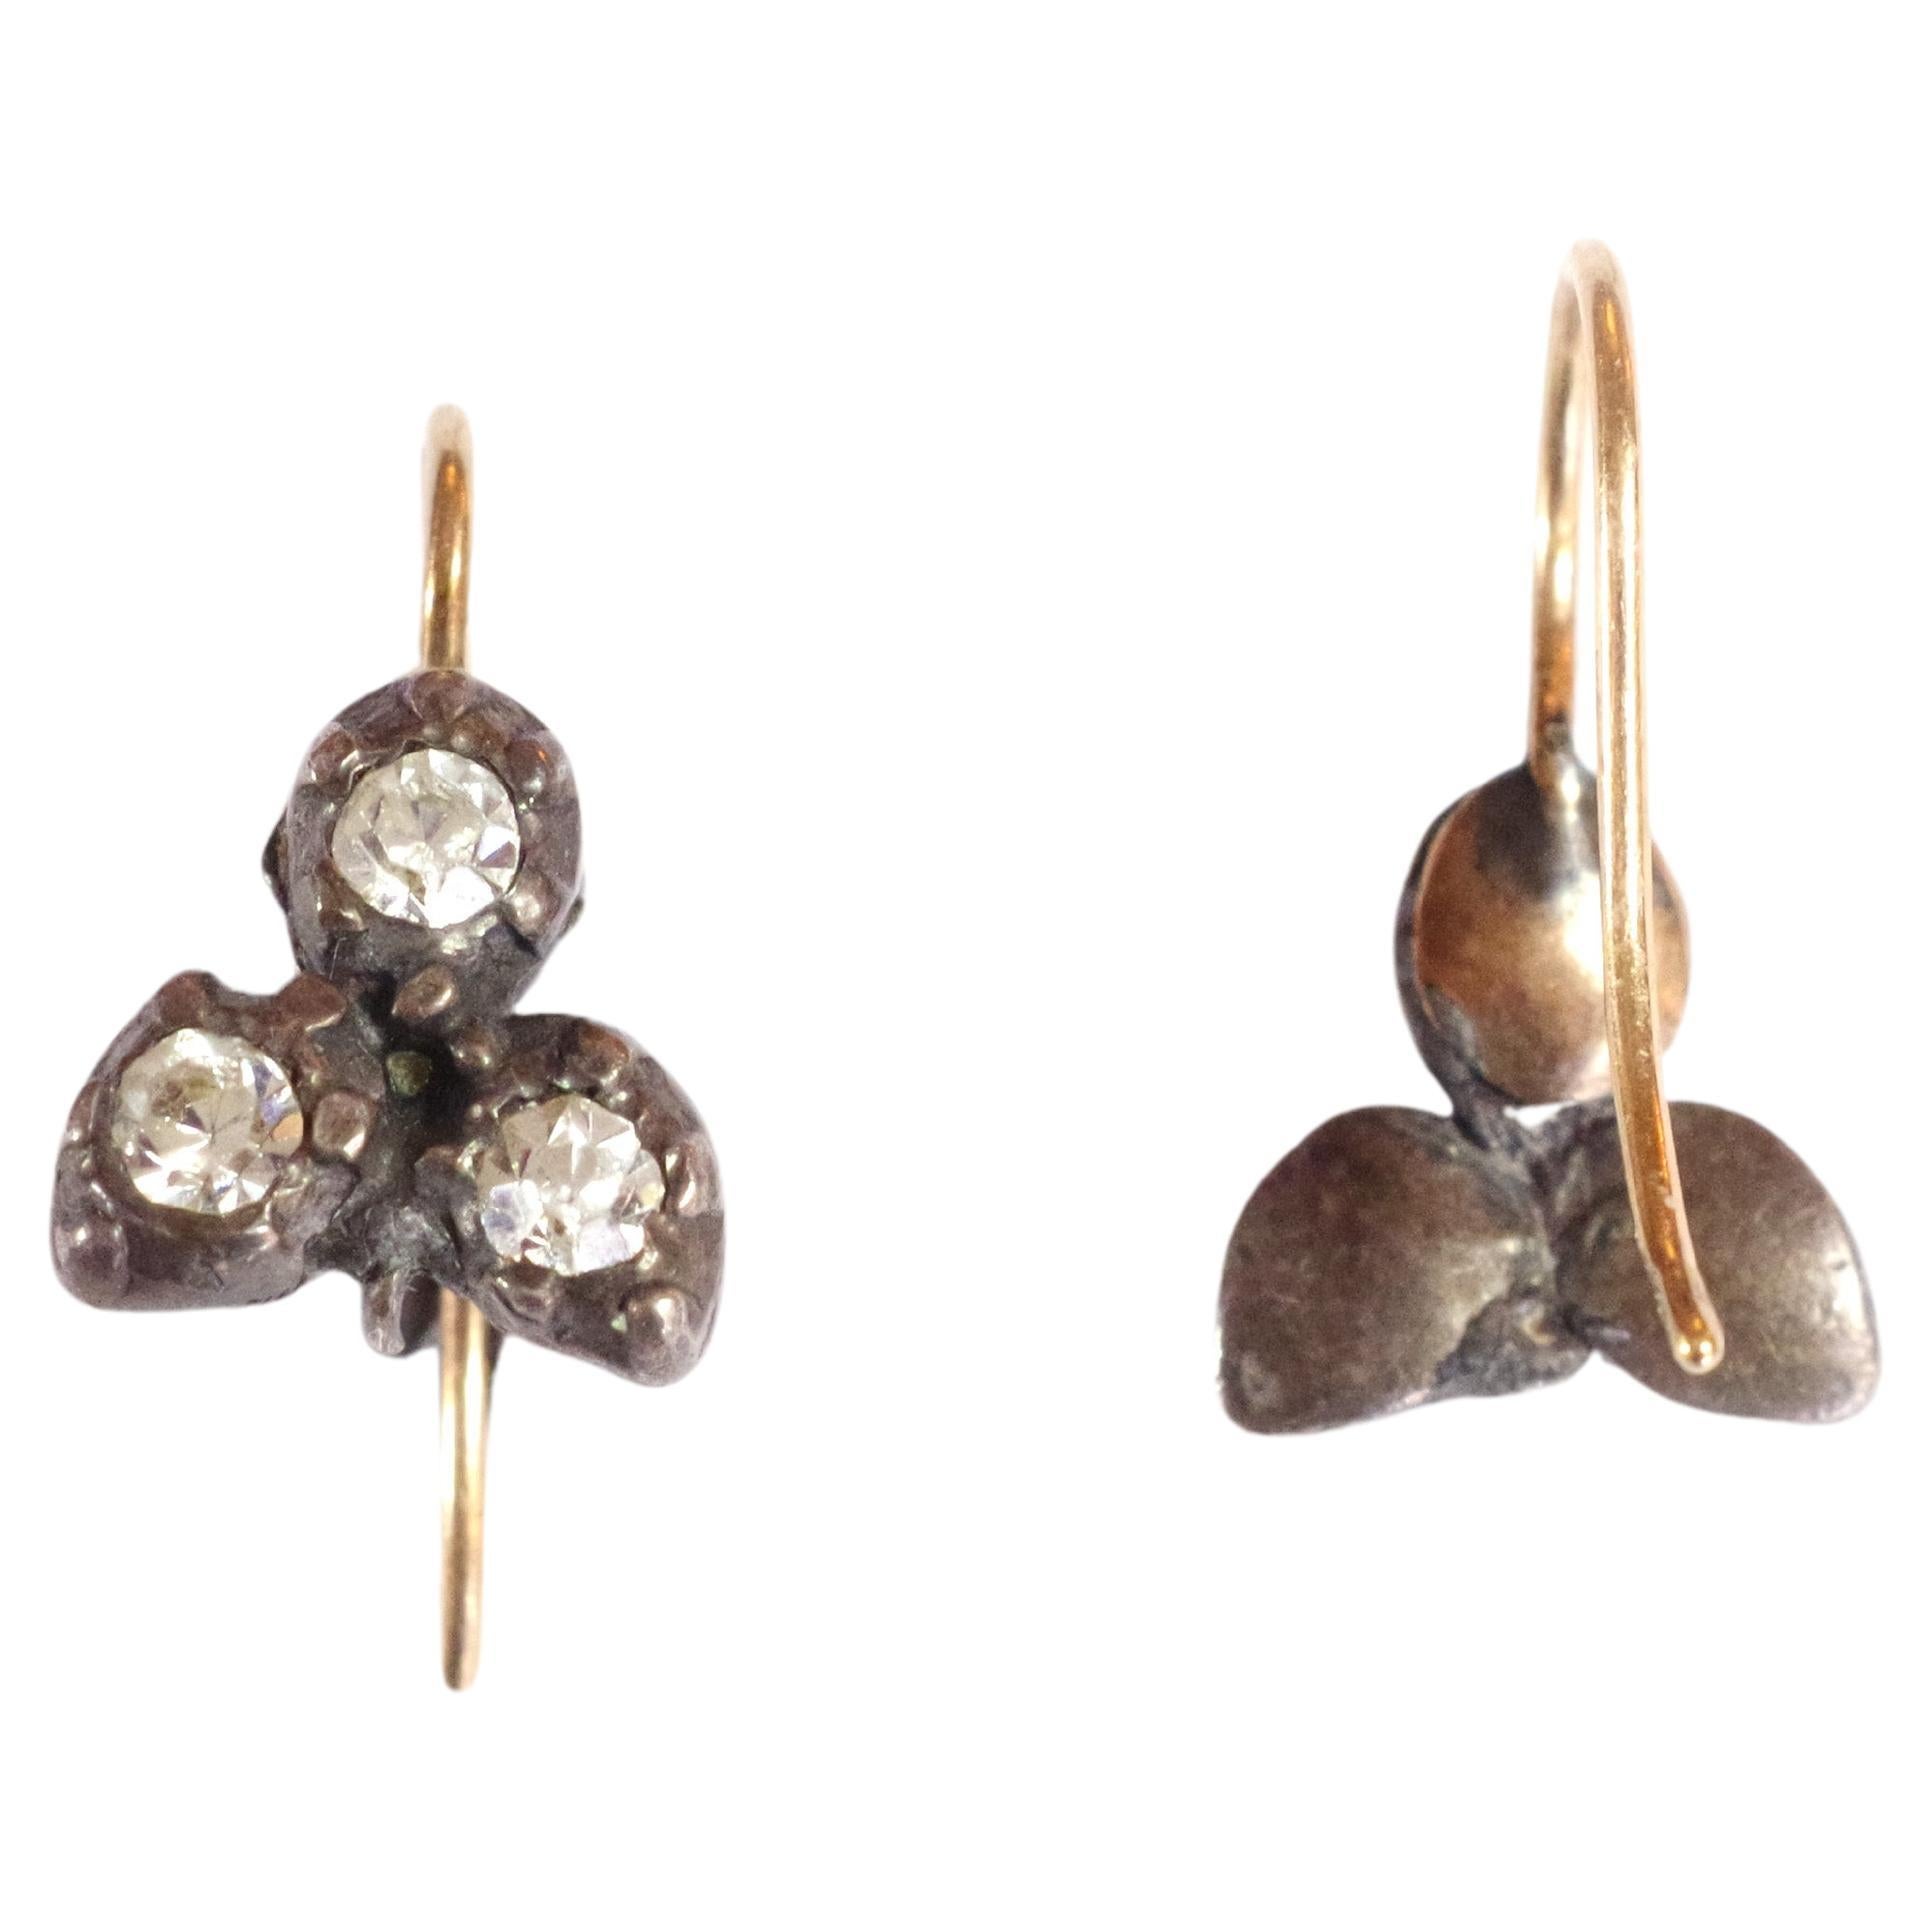 Antique Earrings Leaves, Leaves Earrings Silver and Gold, Antique Paste Earrings